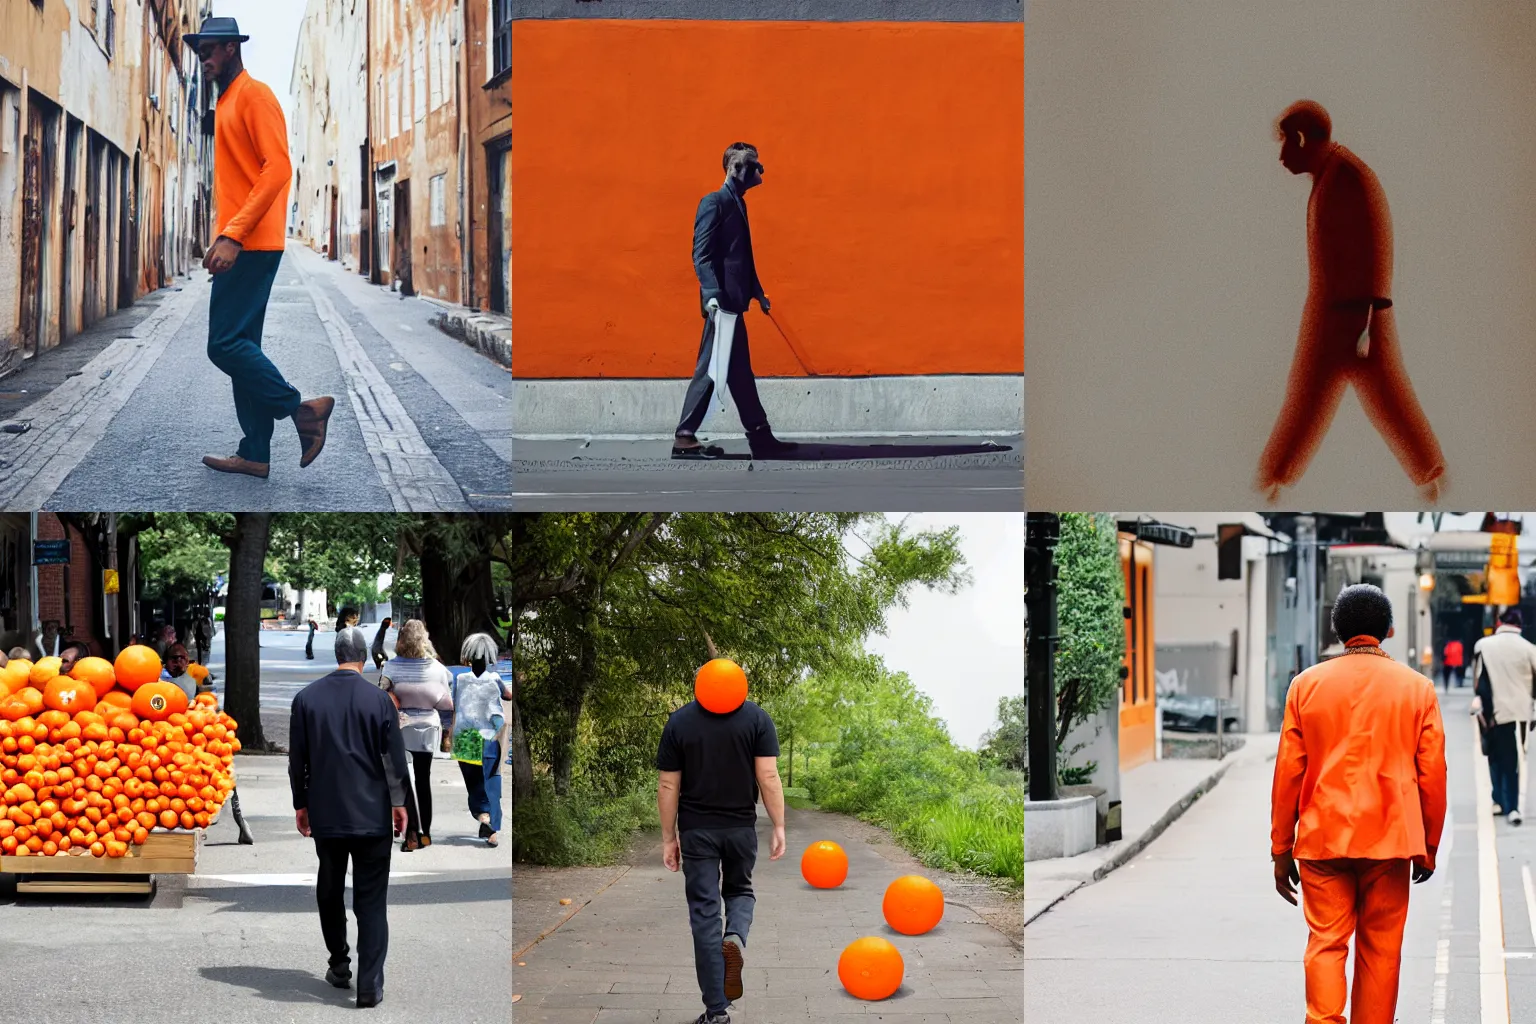 Prompt: an orange and man walking